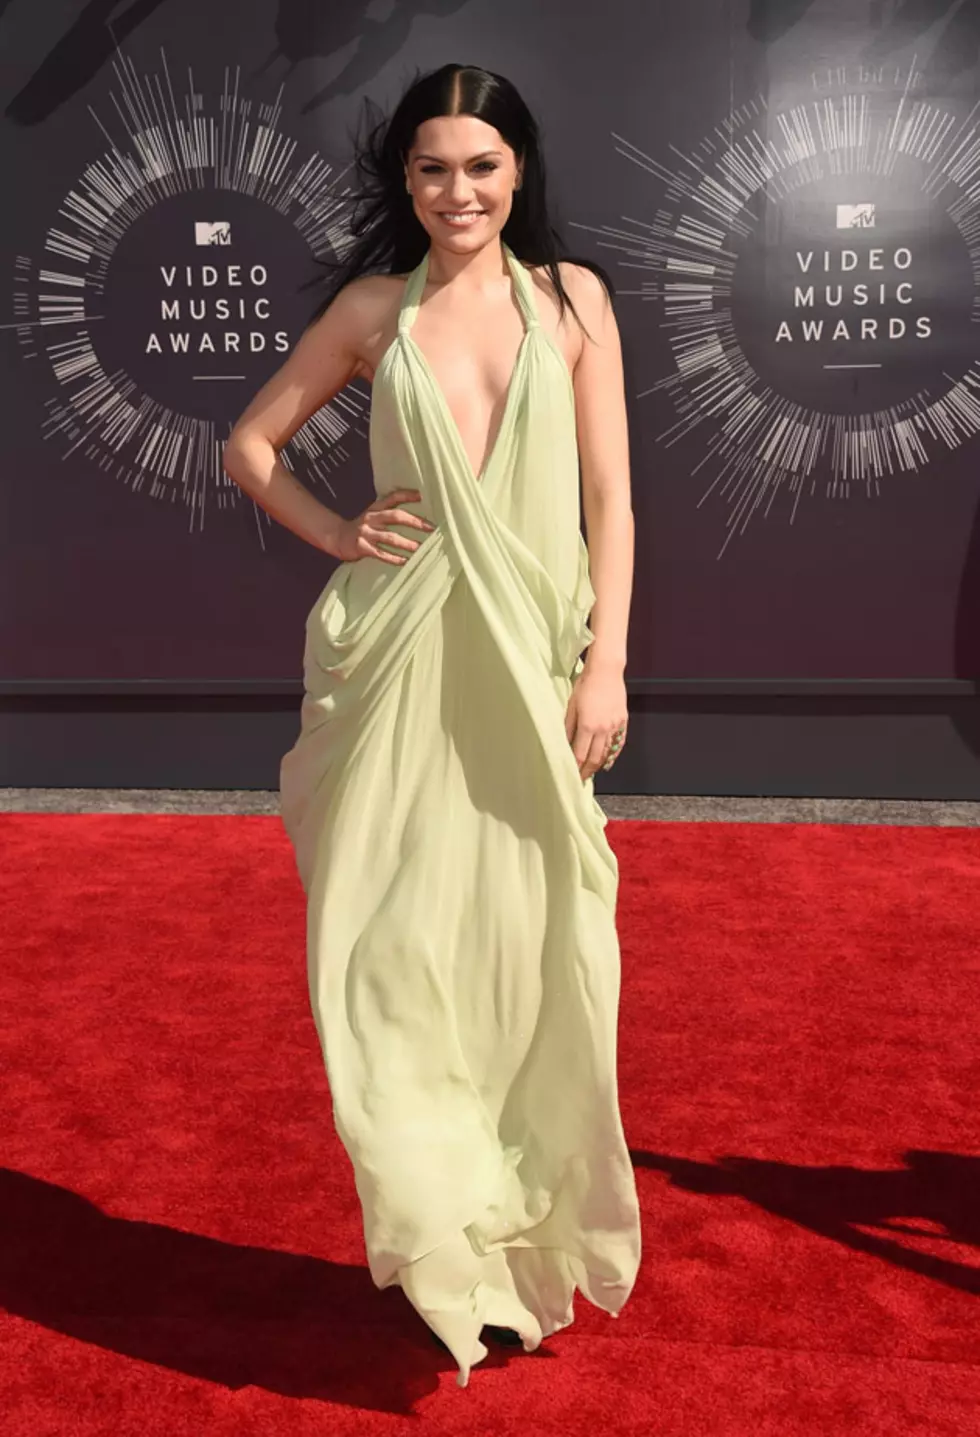 Jessie J Wears Backless Dress on 2014 MTV VMAs Red Carpet [PHOTOS]